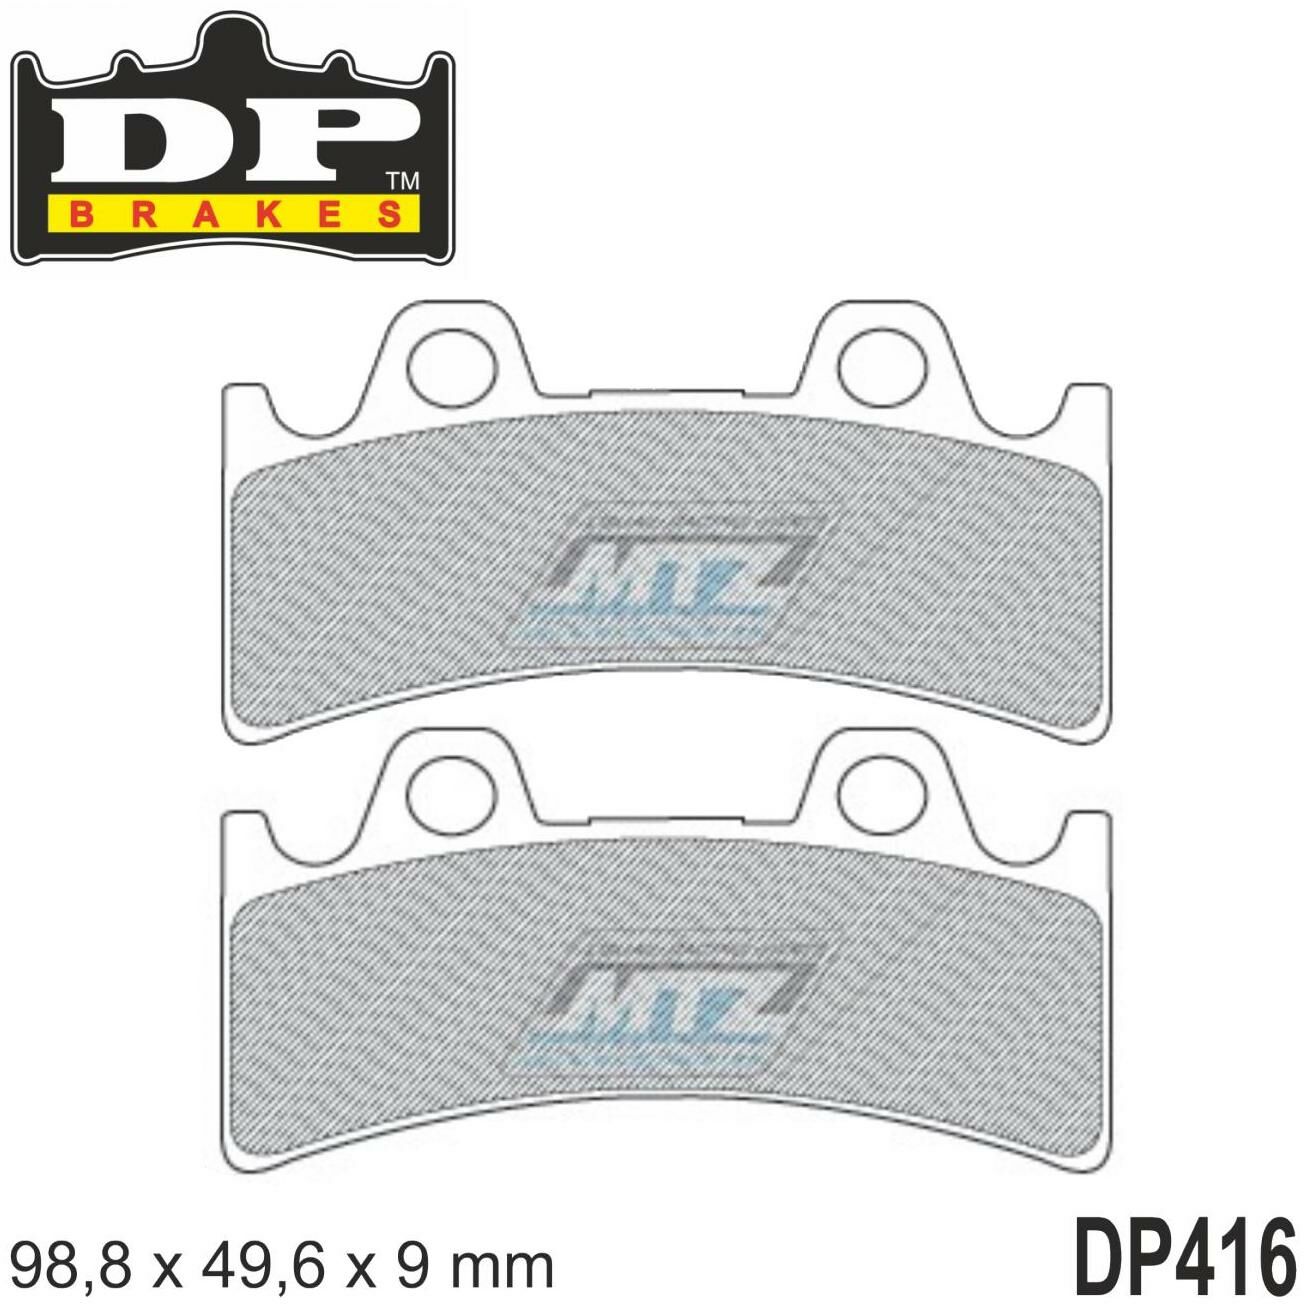 Obrázek produktu Destičky brzdové DP416-RDP DP Brakes - směs RDP X-RACE Titanium (dp416) DP416-RDP